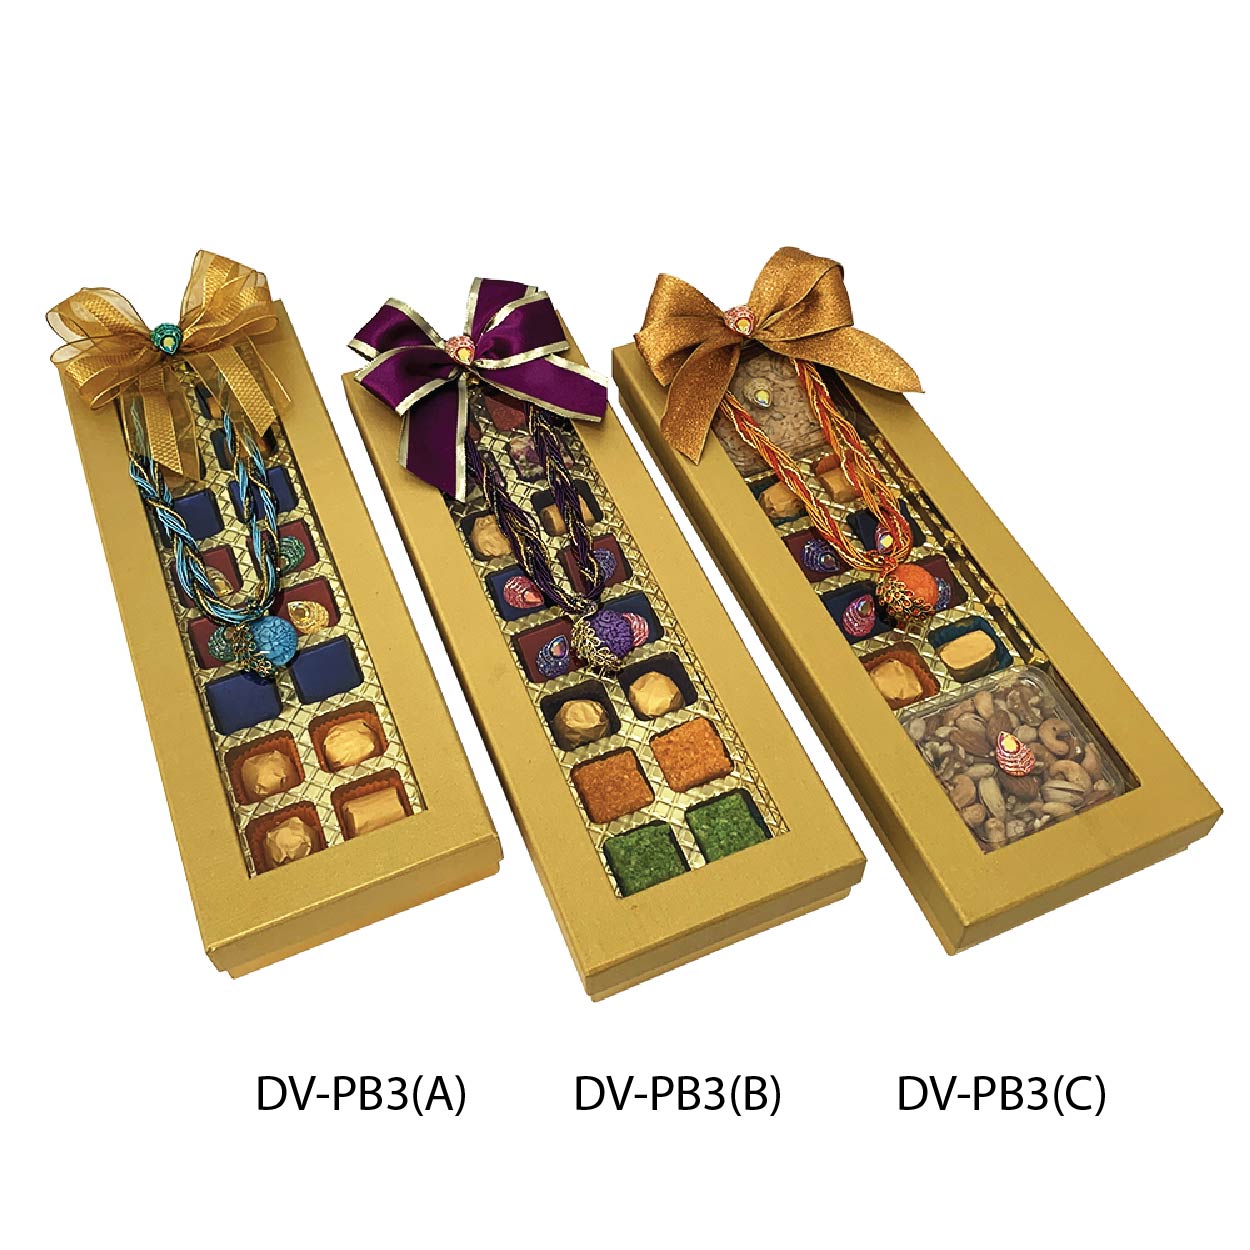 DV-PB3 Deepavali Gift Box